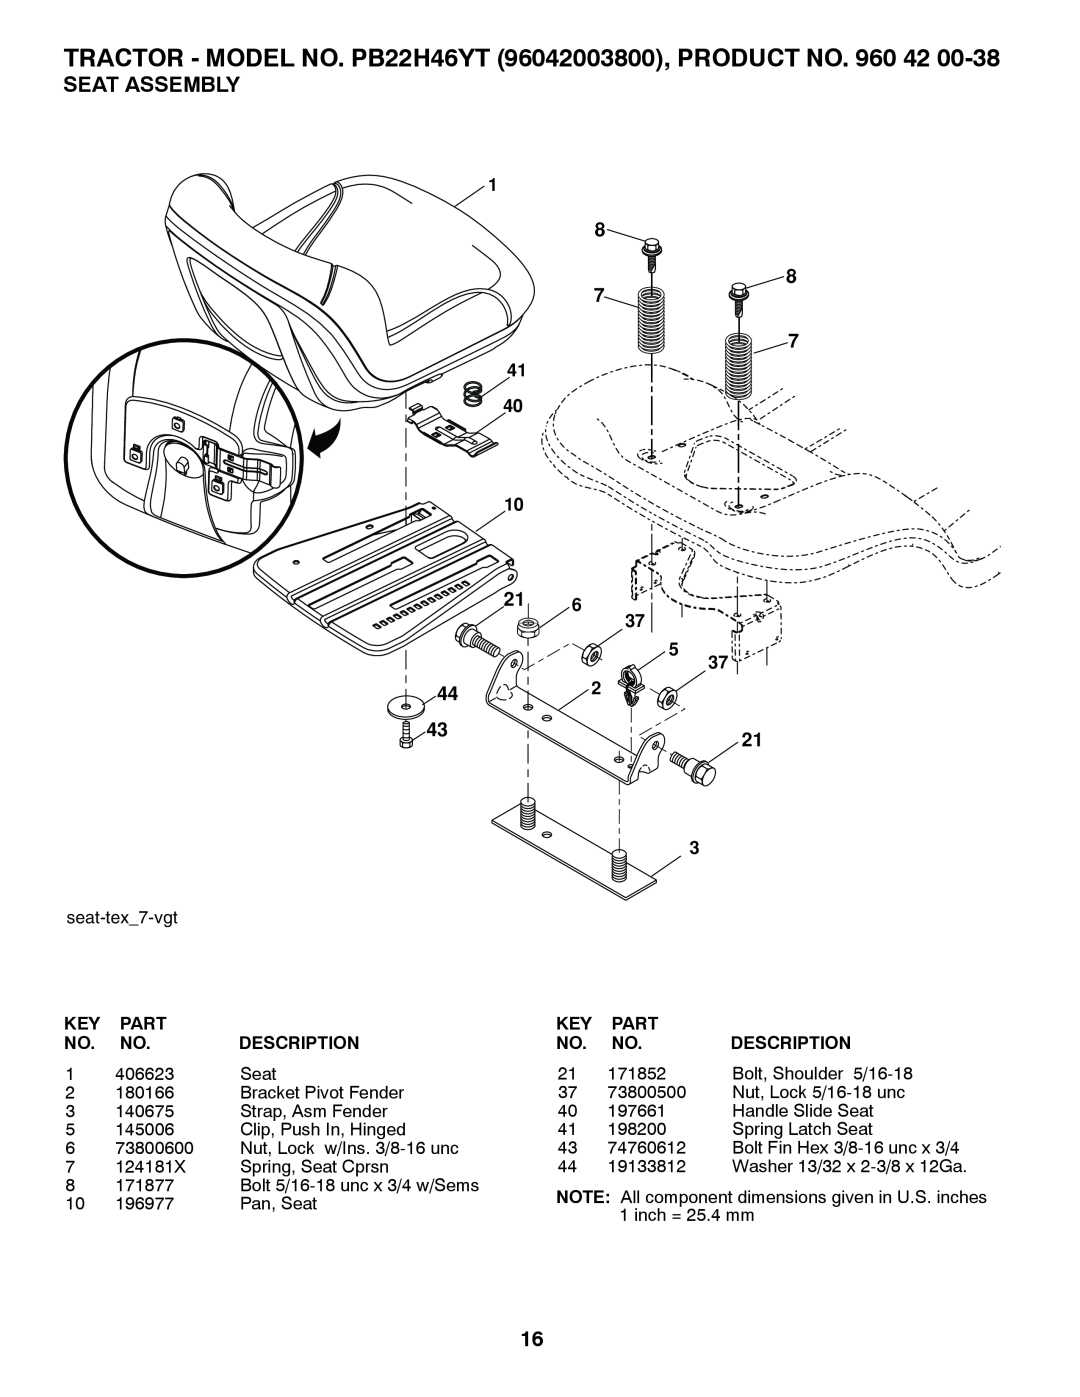 Poulan manual Seat Assembly, TRACTOR - MODEL NO. PB22H46YT 96042003800, PRODUCT NO. 960 42, Part, Description 